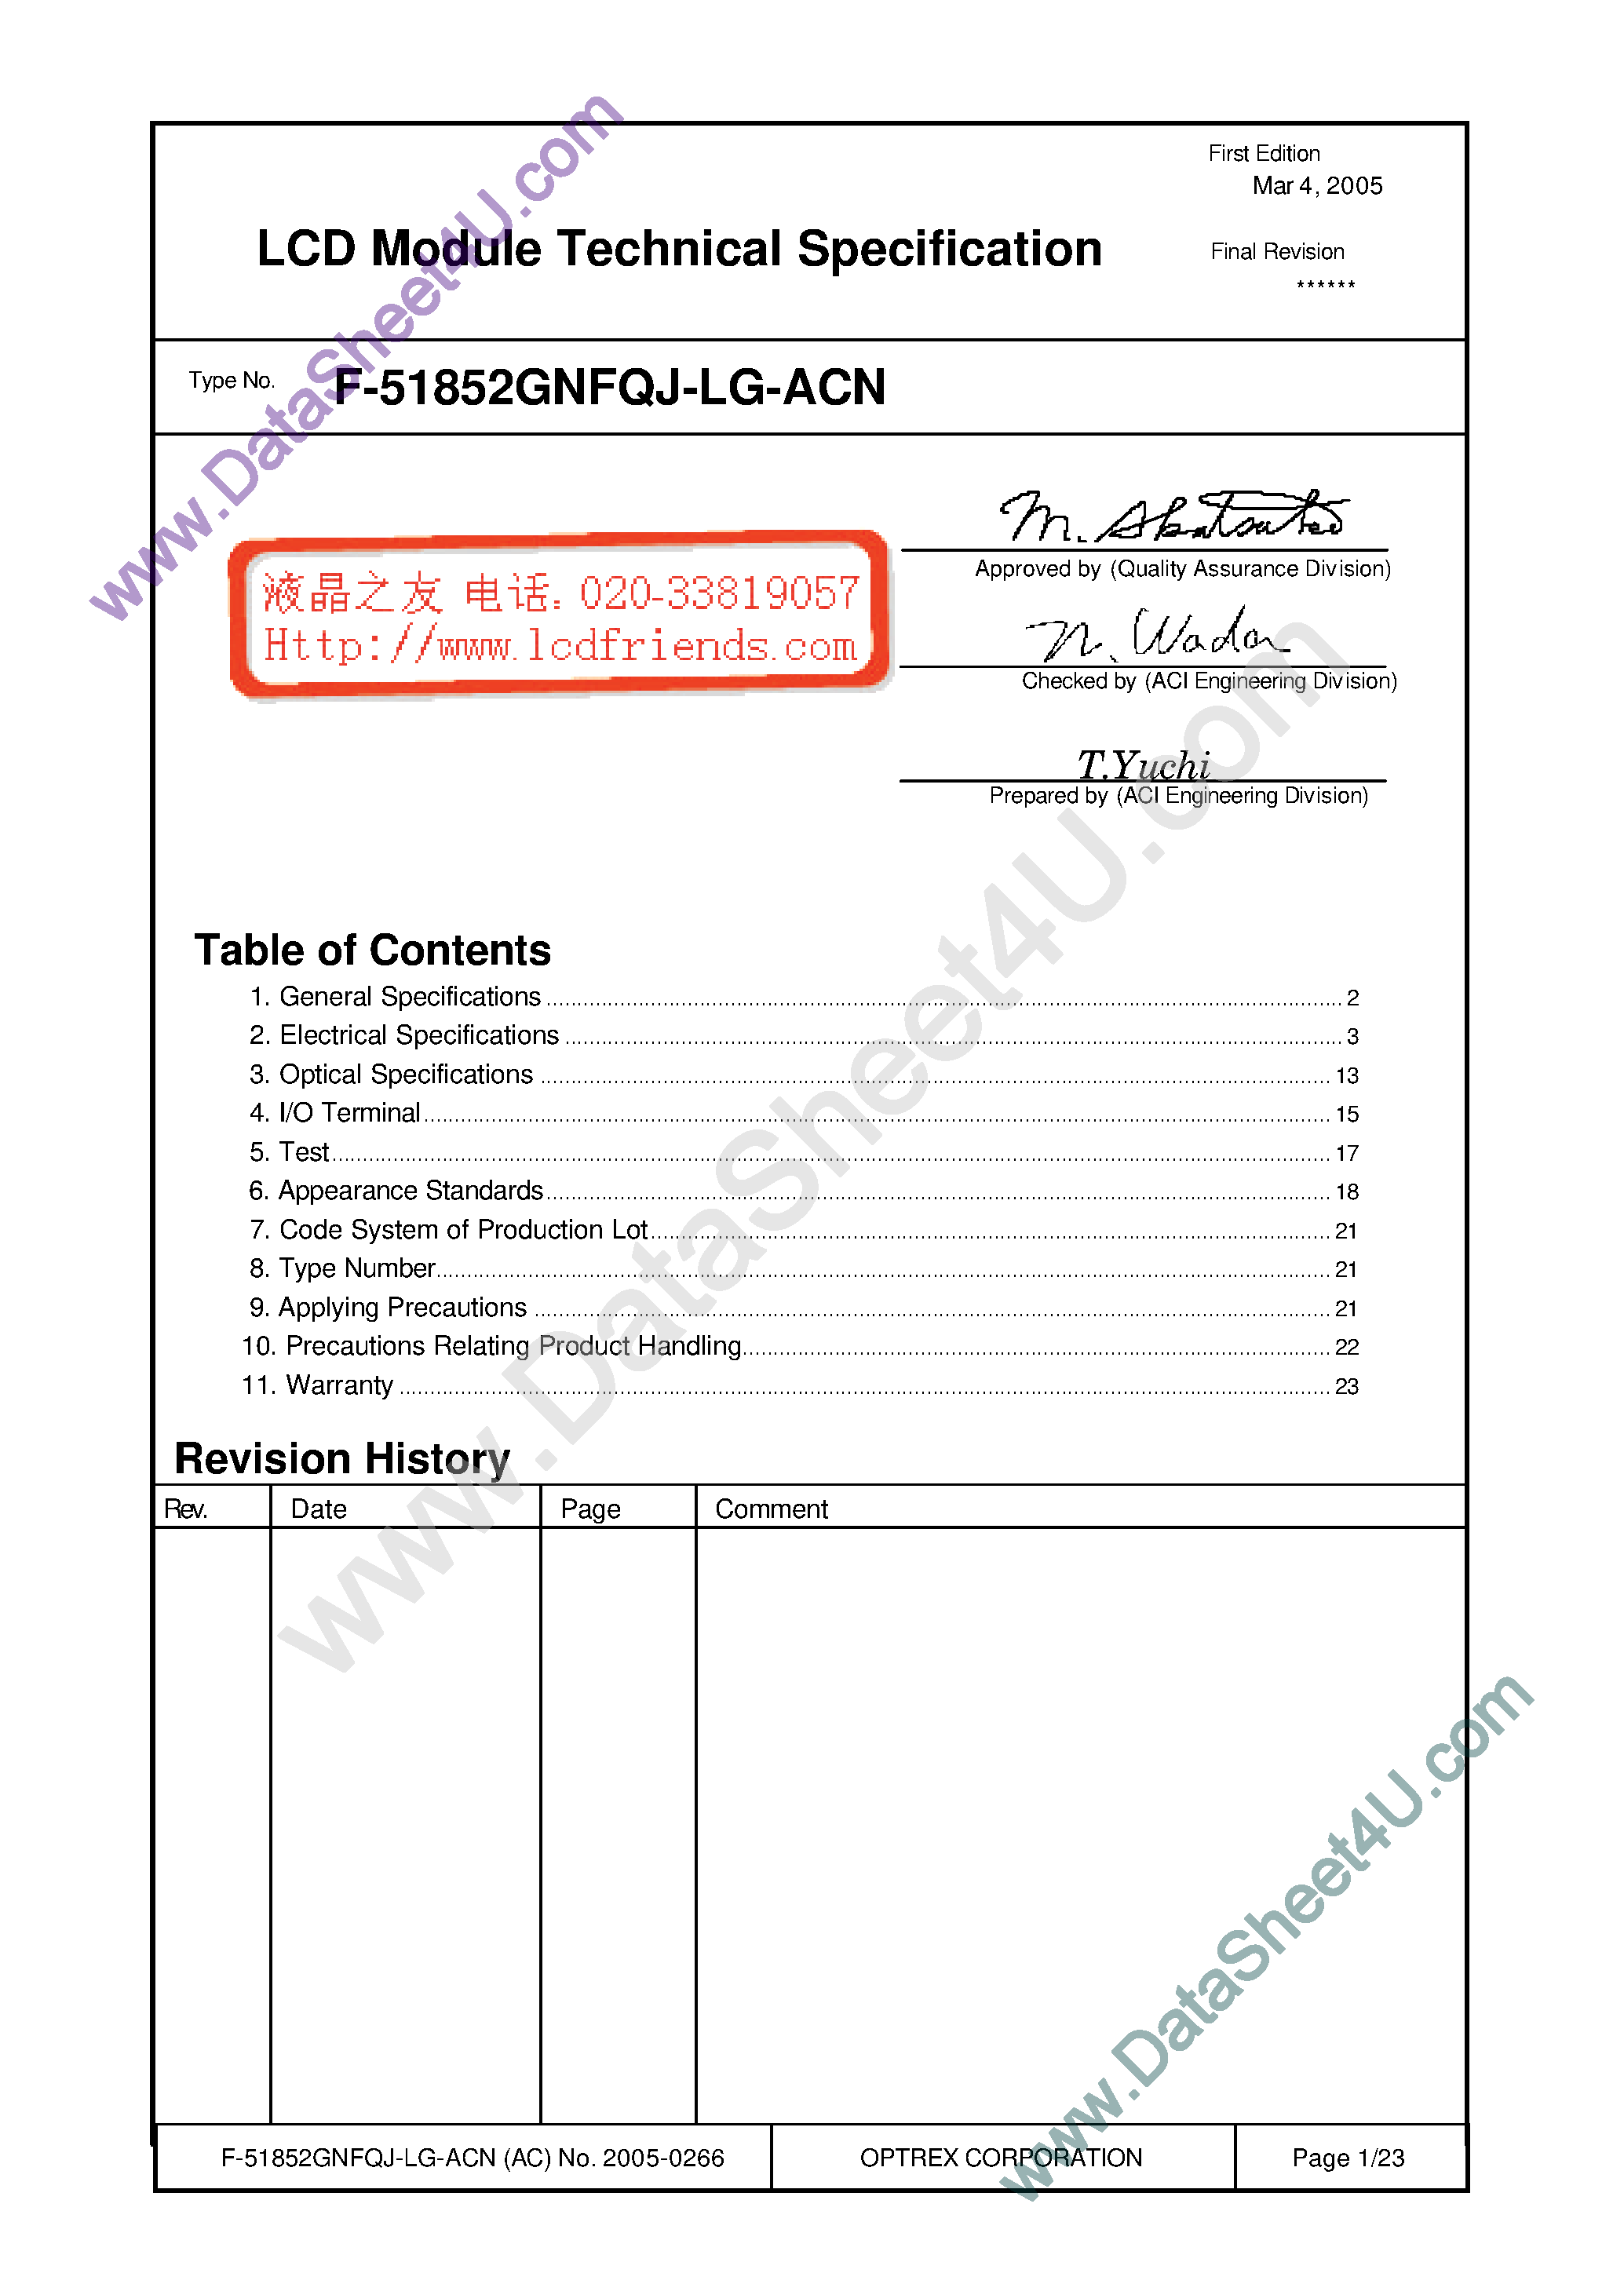 Datasheet F-51852GNFQJ-LG-ACN - LCD_Module page 1